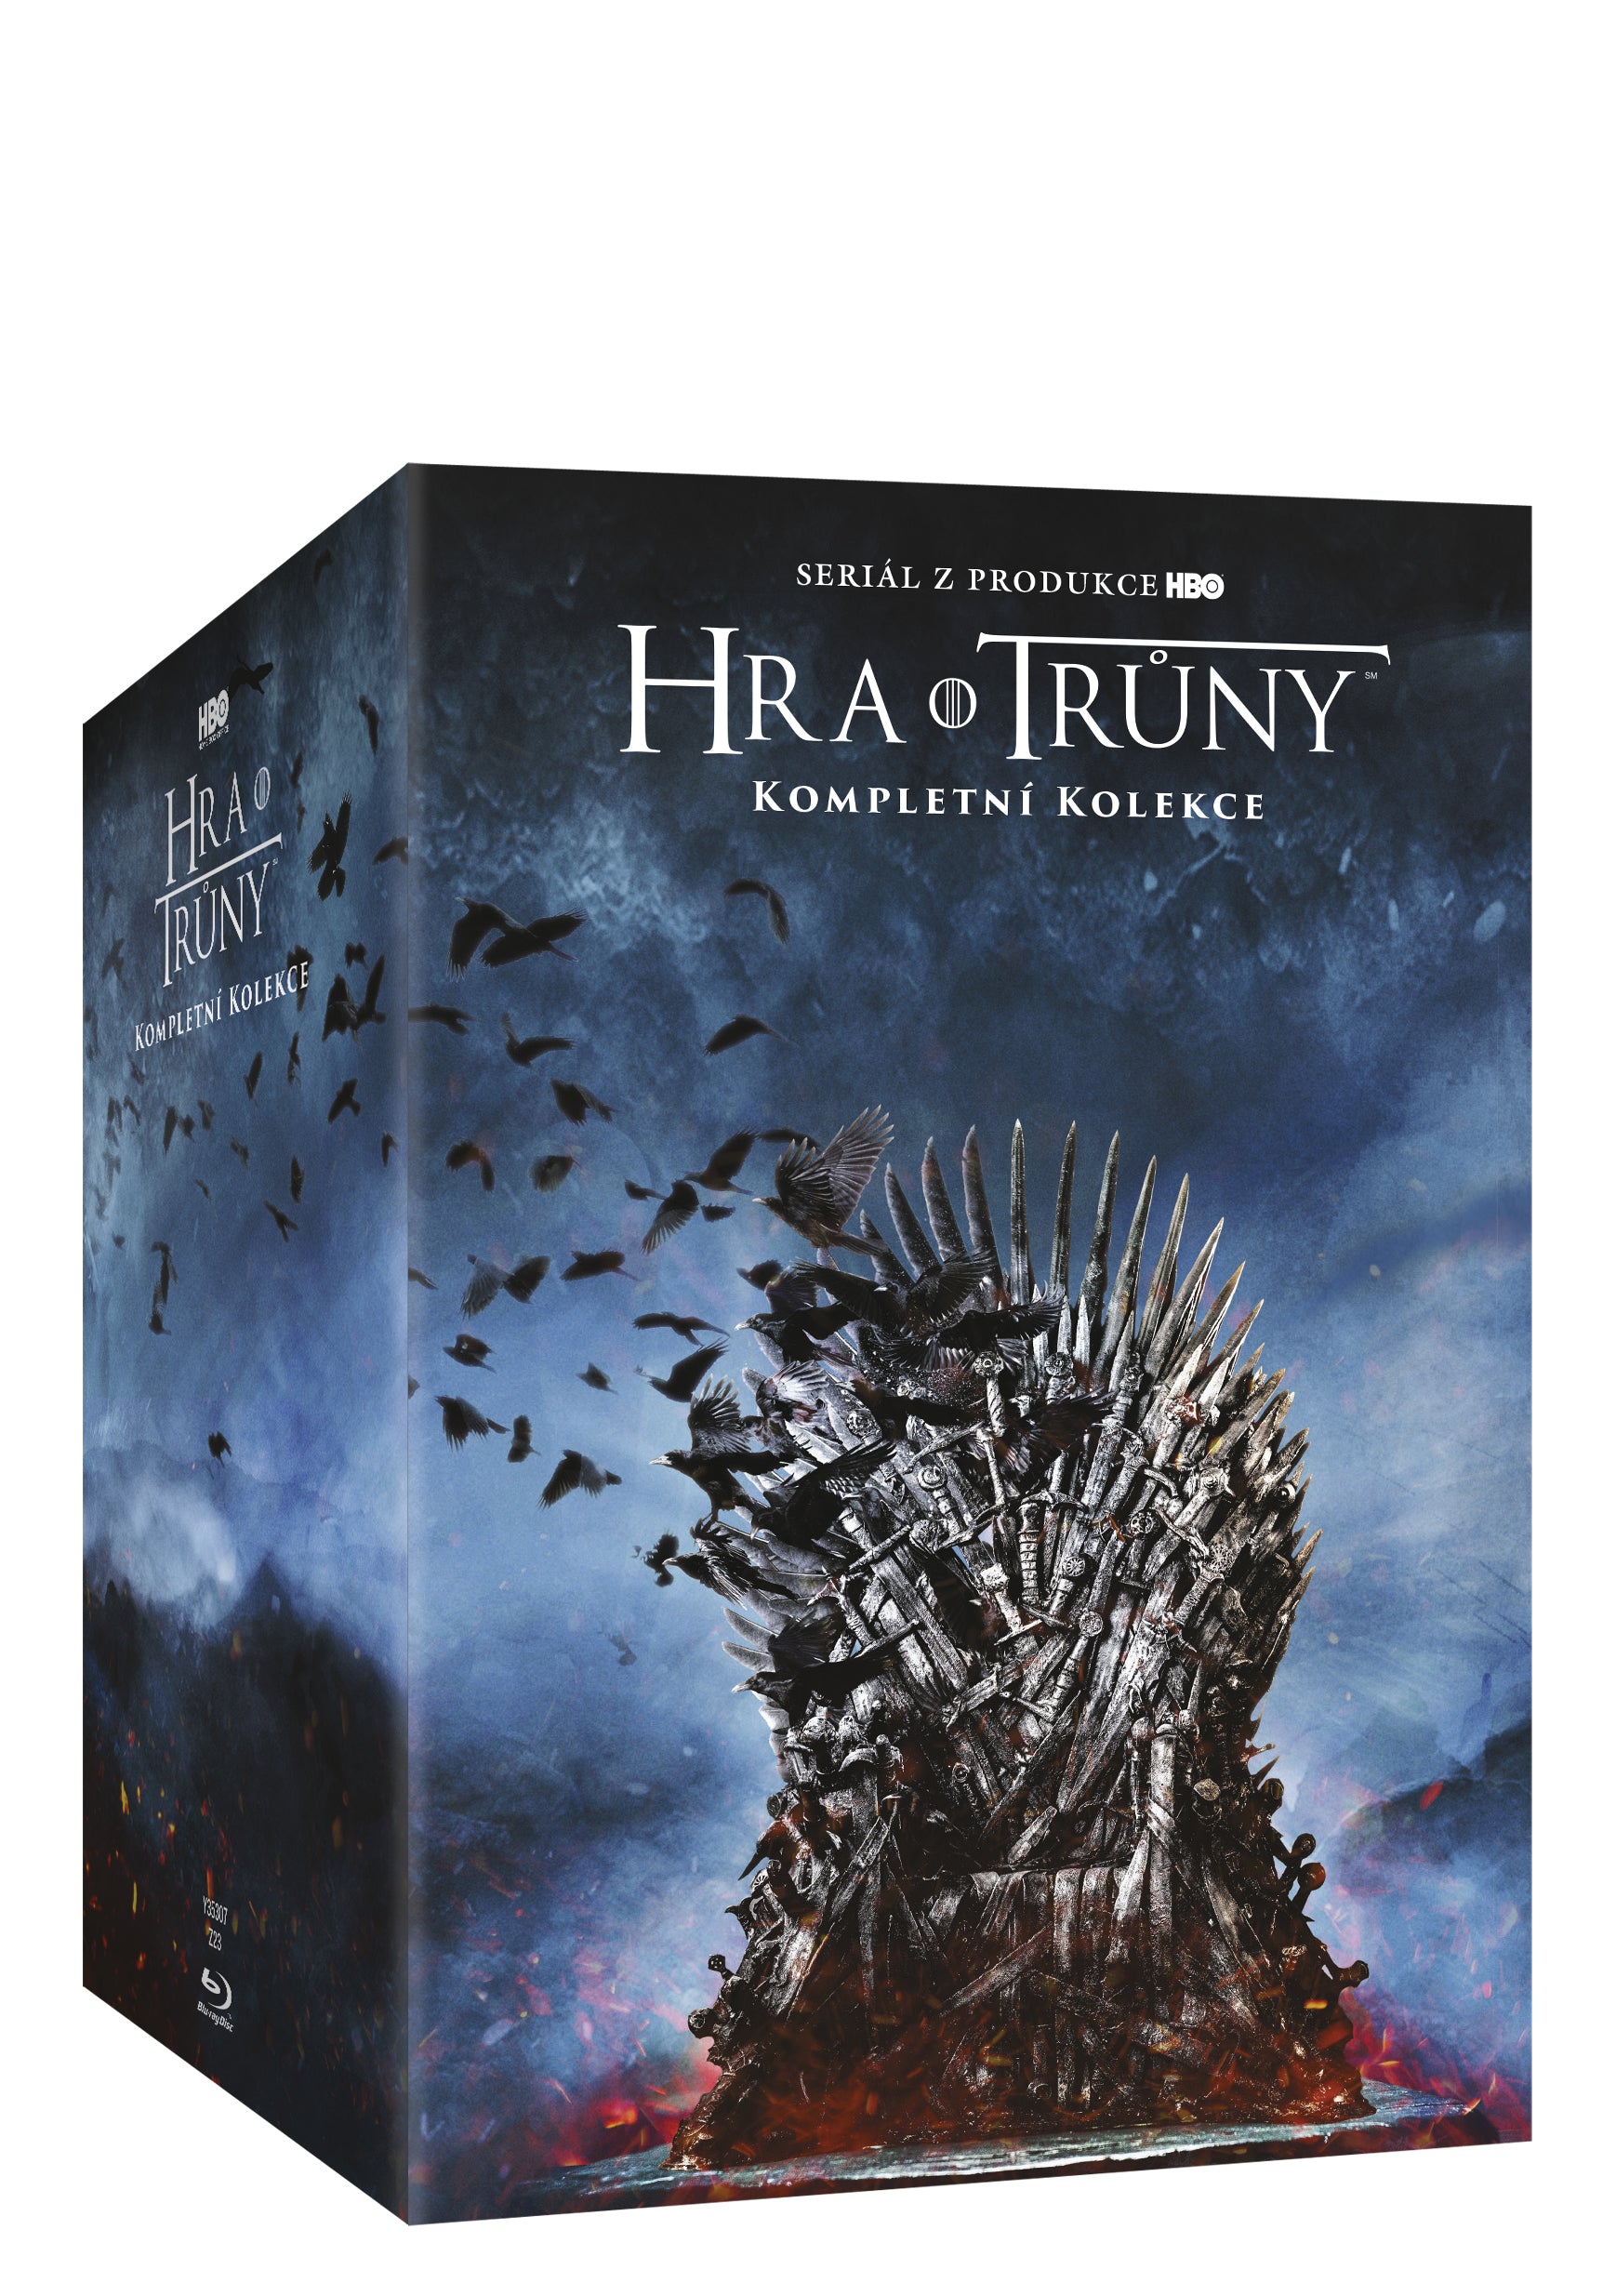 Hra o truny kolekce 1.-8. serie 36BD / Game of Thrones Season 1-8 BD Complete Box Set - Czech version